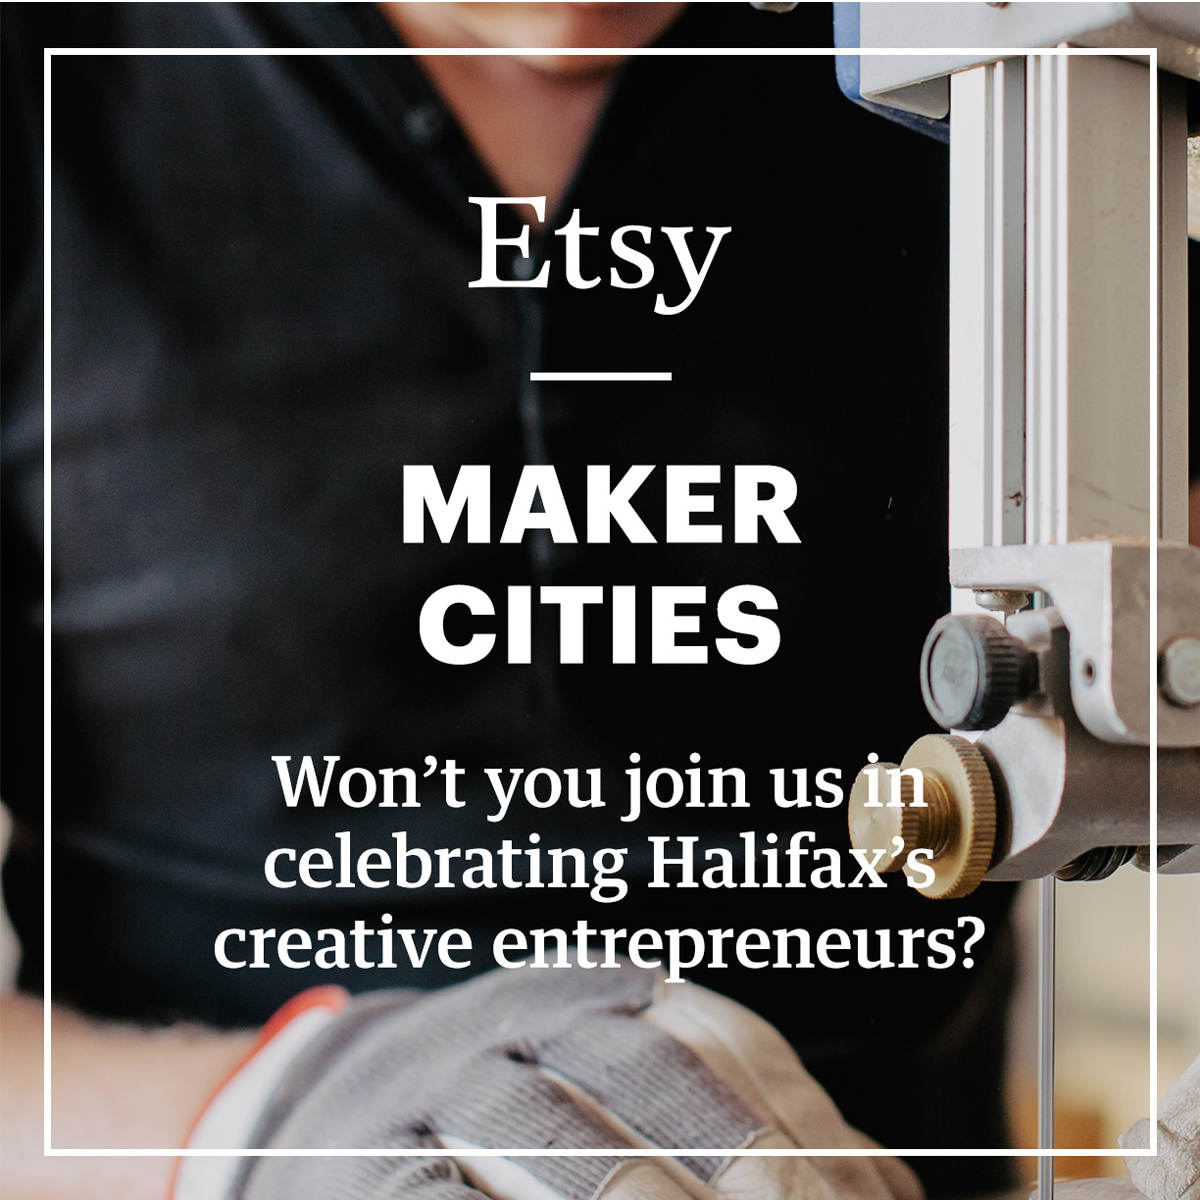 etsy makers cities halifax mo handahu 02